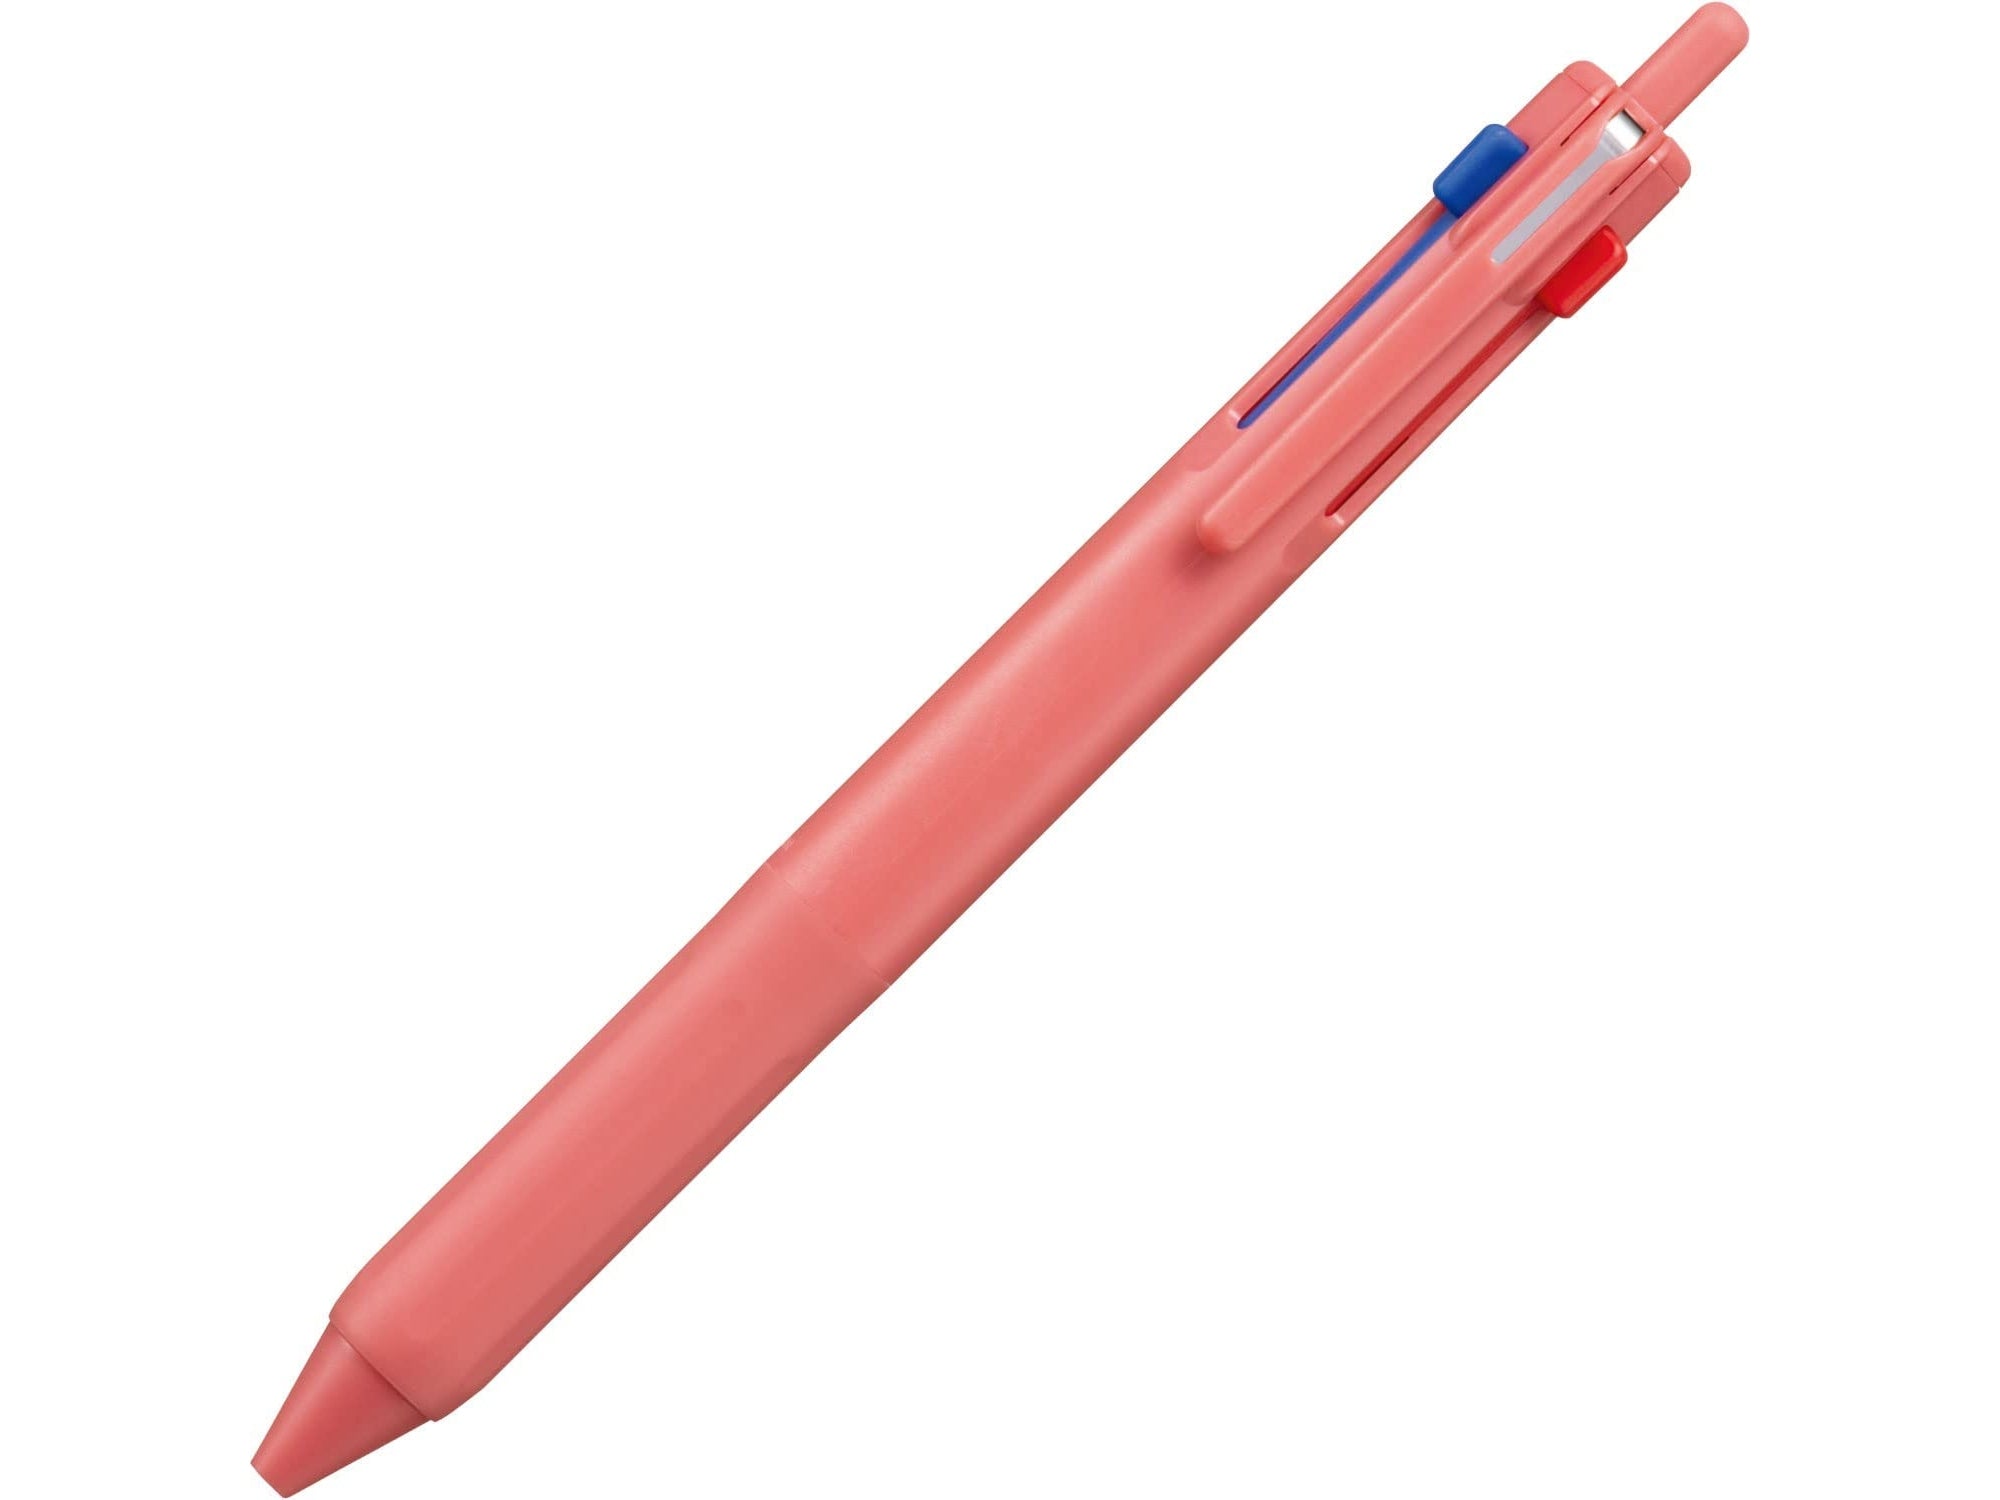 Uni Jetstream 3 Colour Ball Pen - 0.5mm